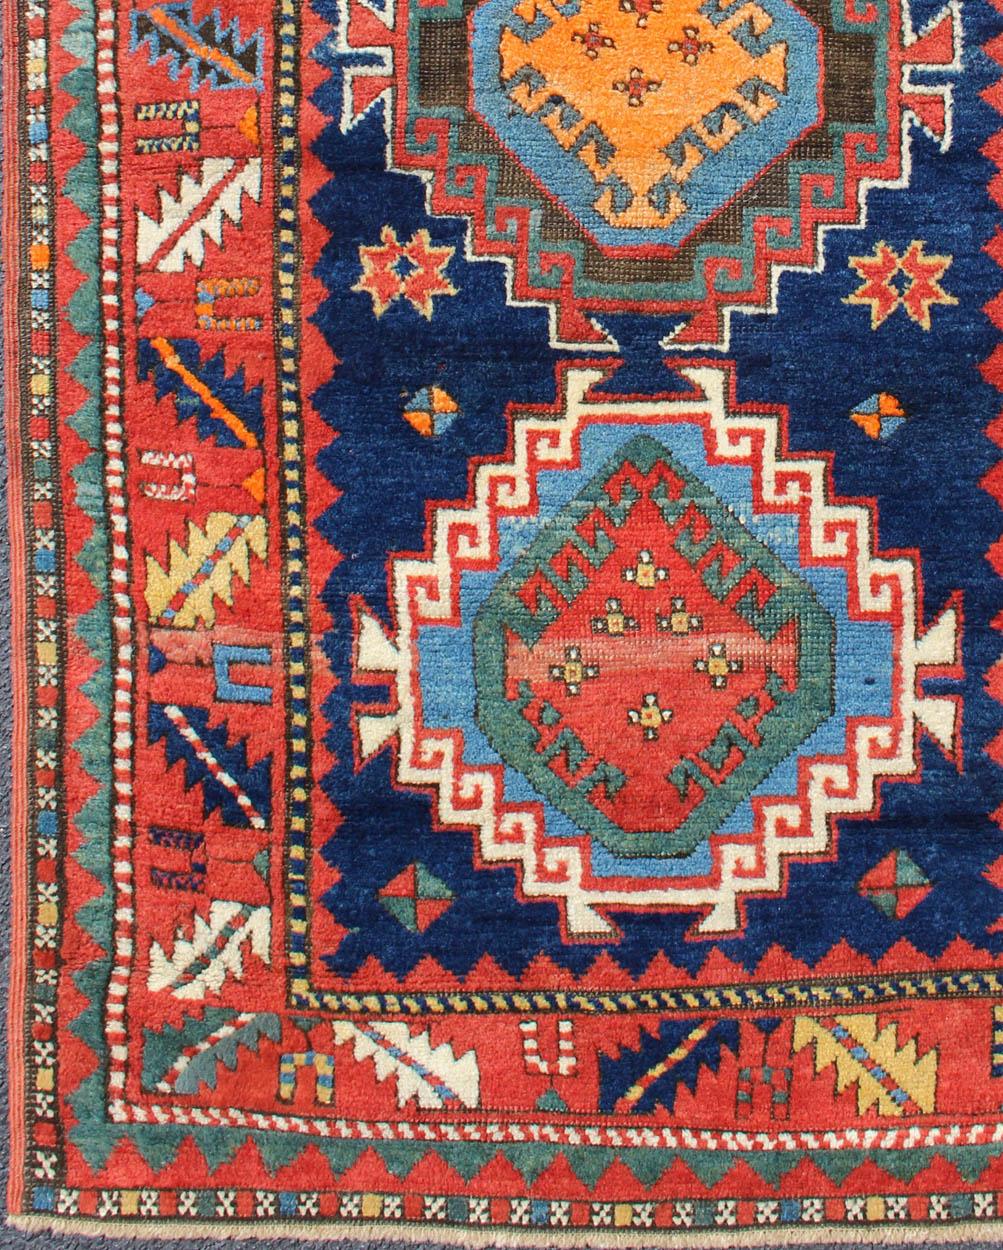 Tribal geometric medallion design Kazak rug antique from Caucasus Region in multi-colors, rug 17-0910, country of origin / type: Iran / Caucasian Kazak, circa 1880.

Brilliant Kazak rugs are among the most desirable Caucasian rugs. The vibrant reds,